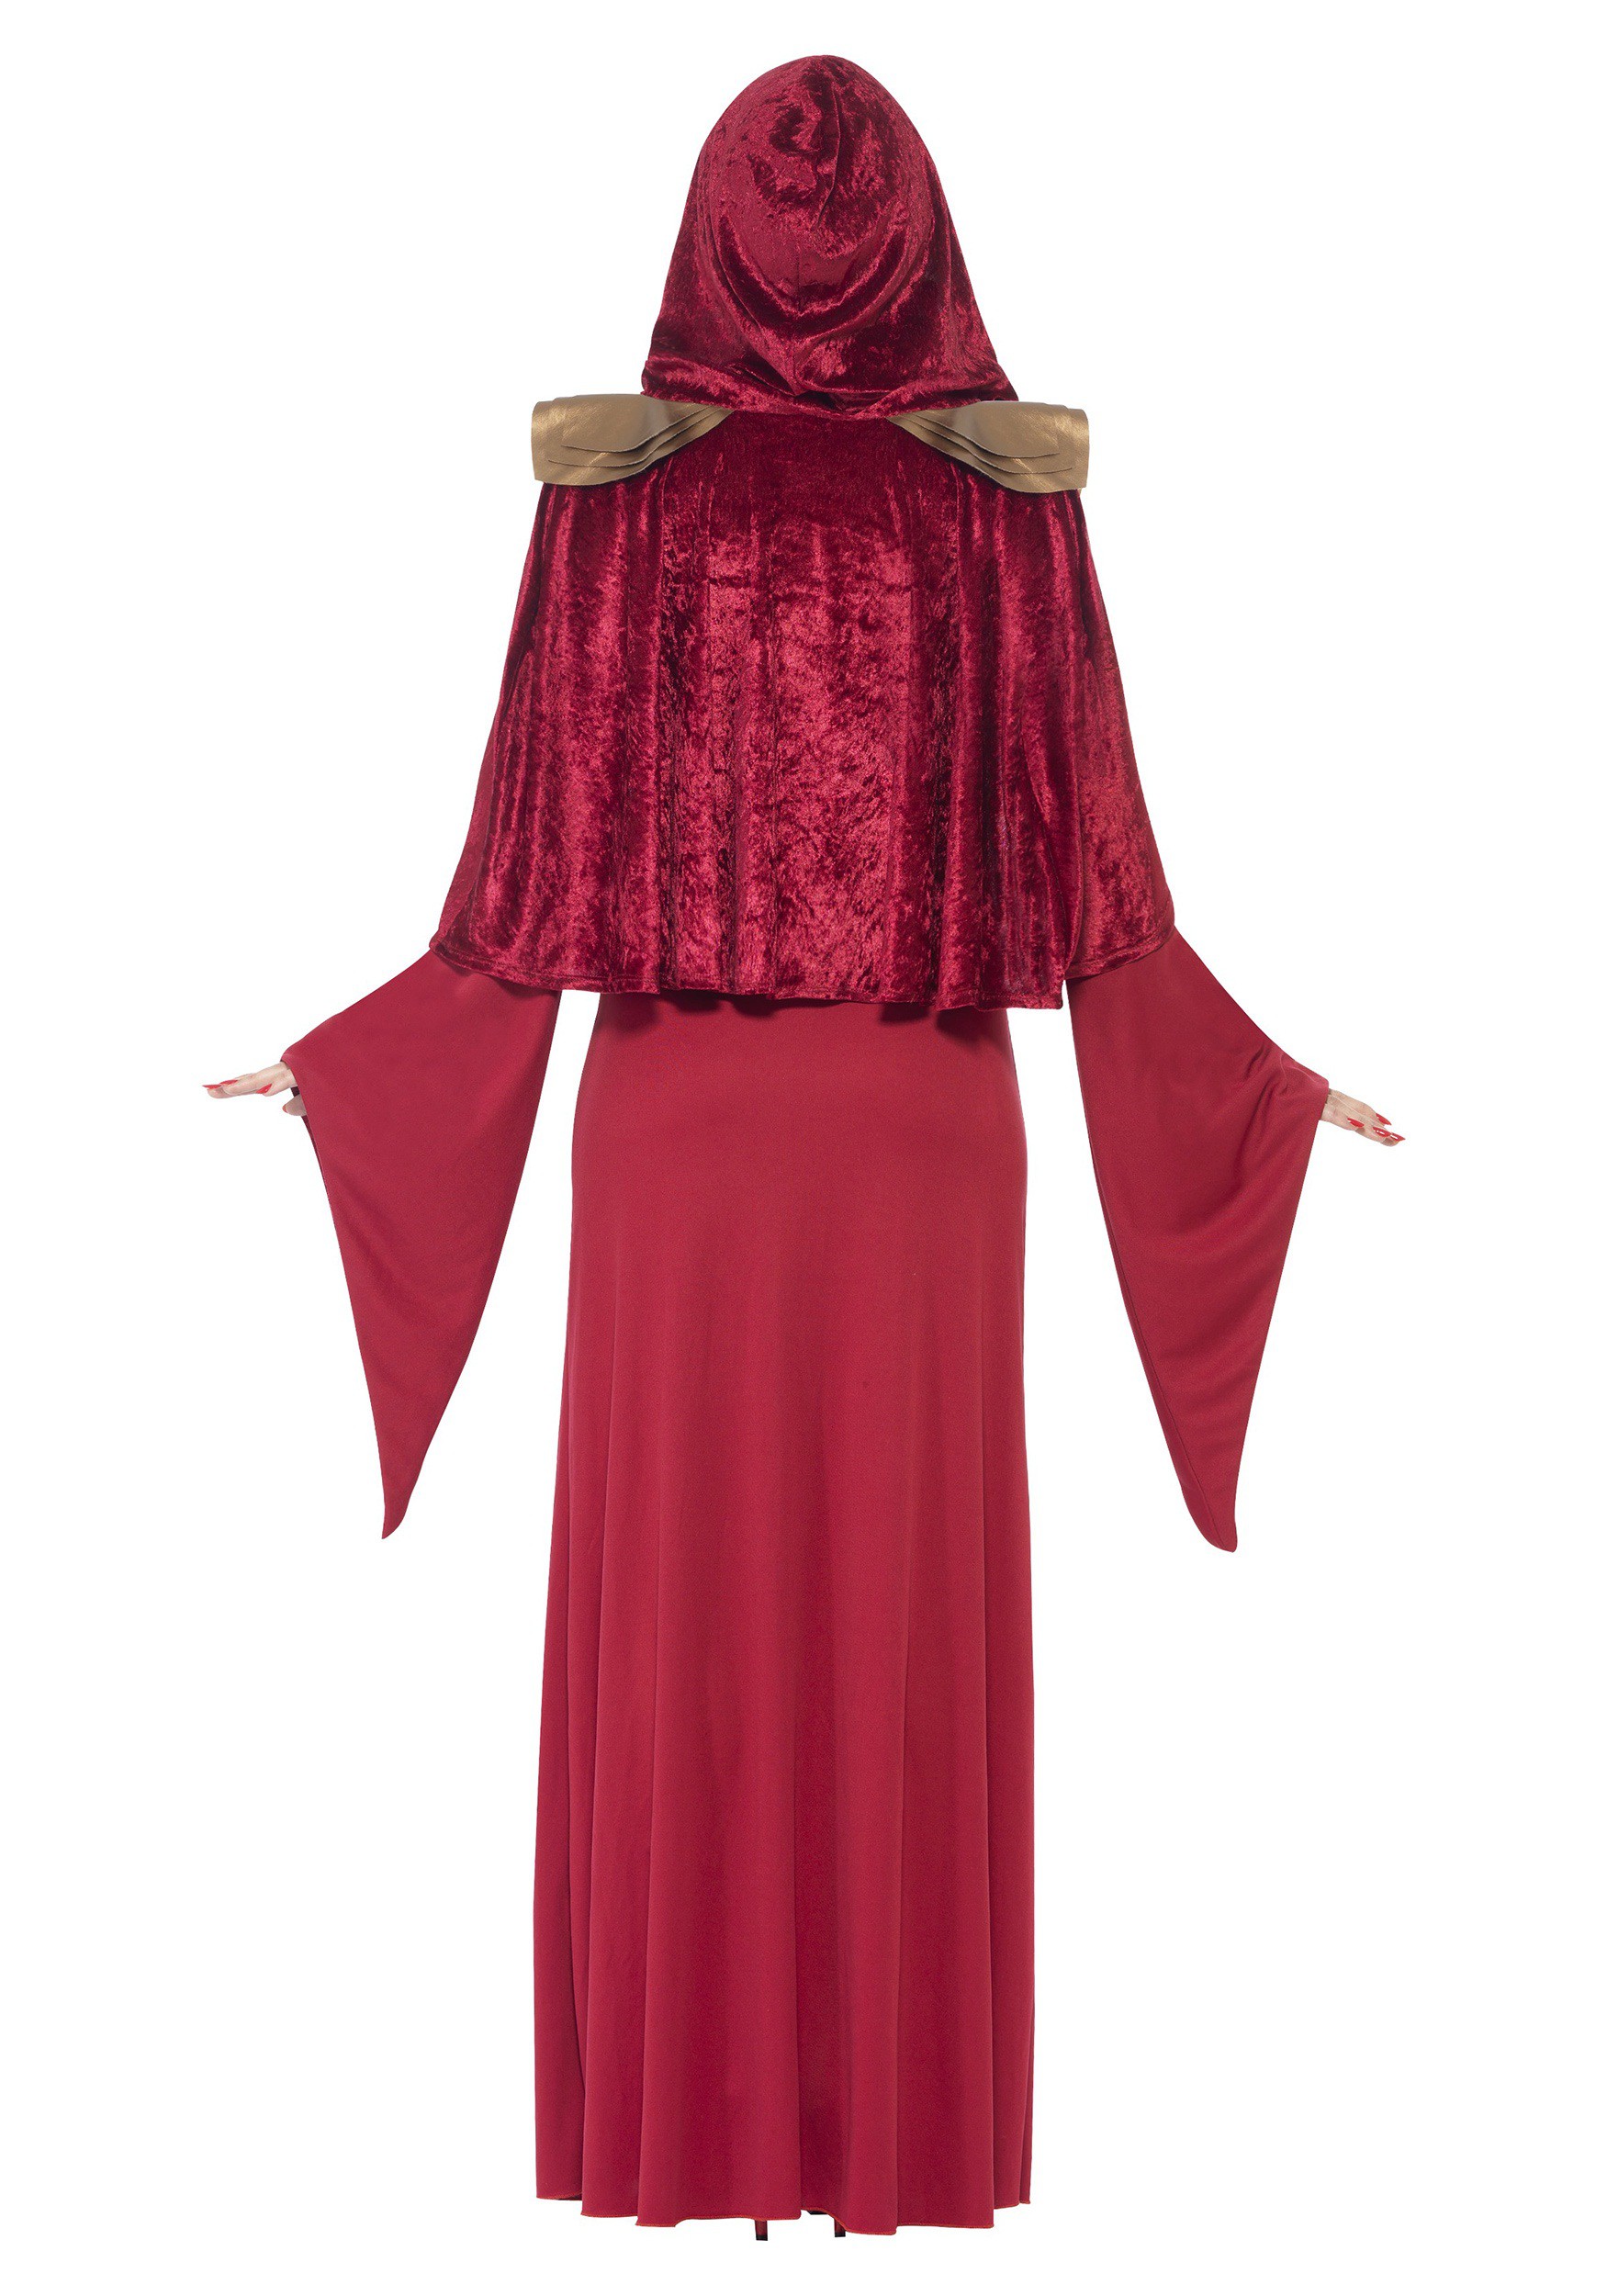 Women's Red High Priestess Costume